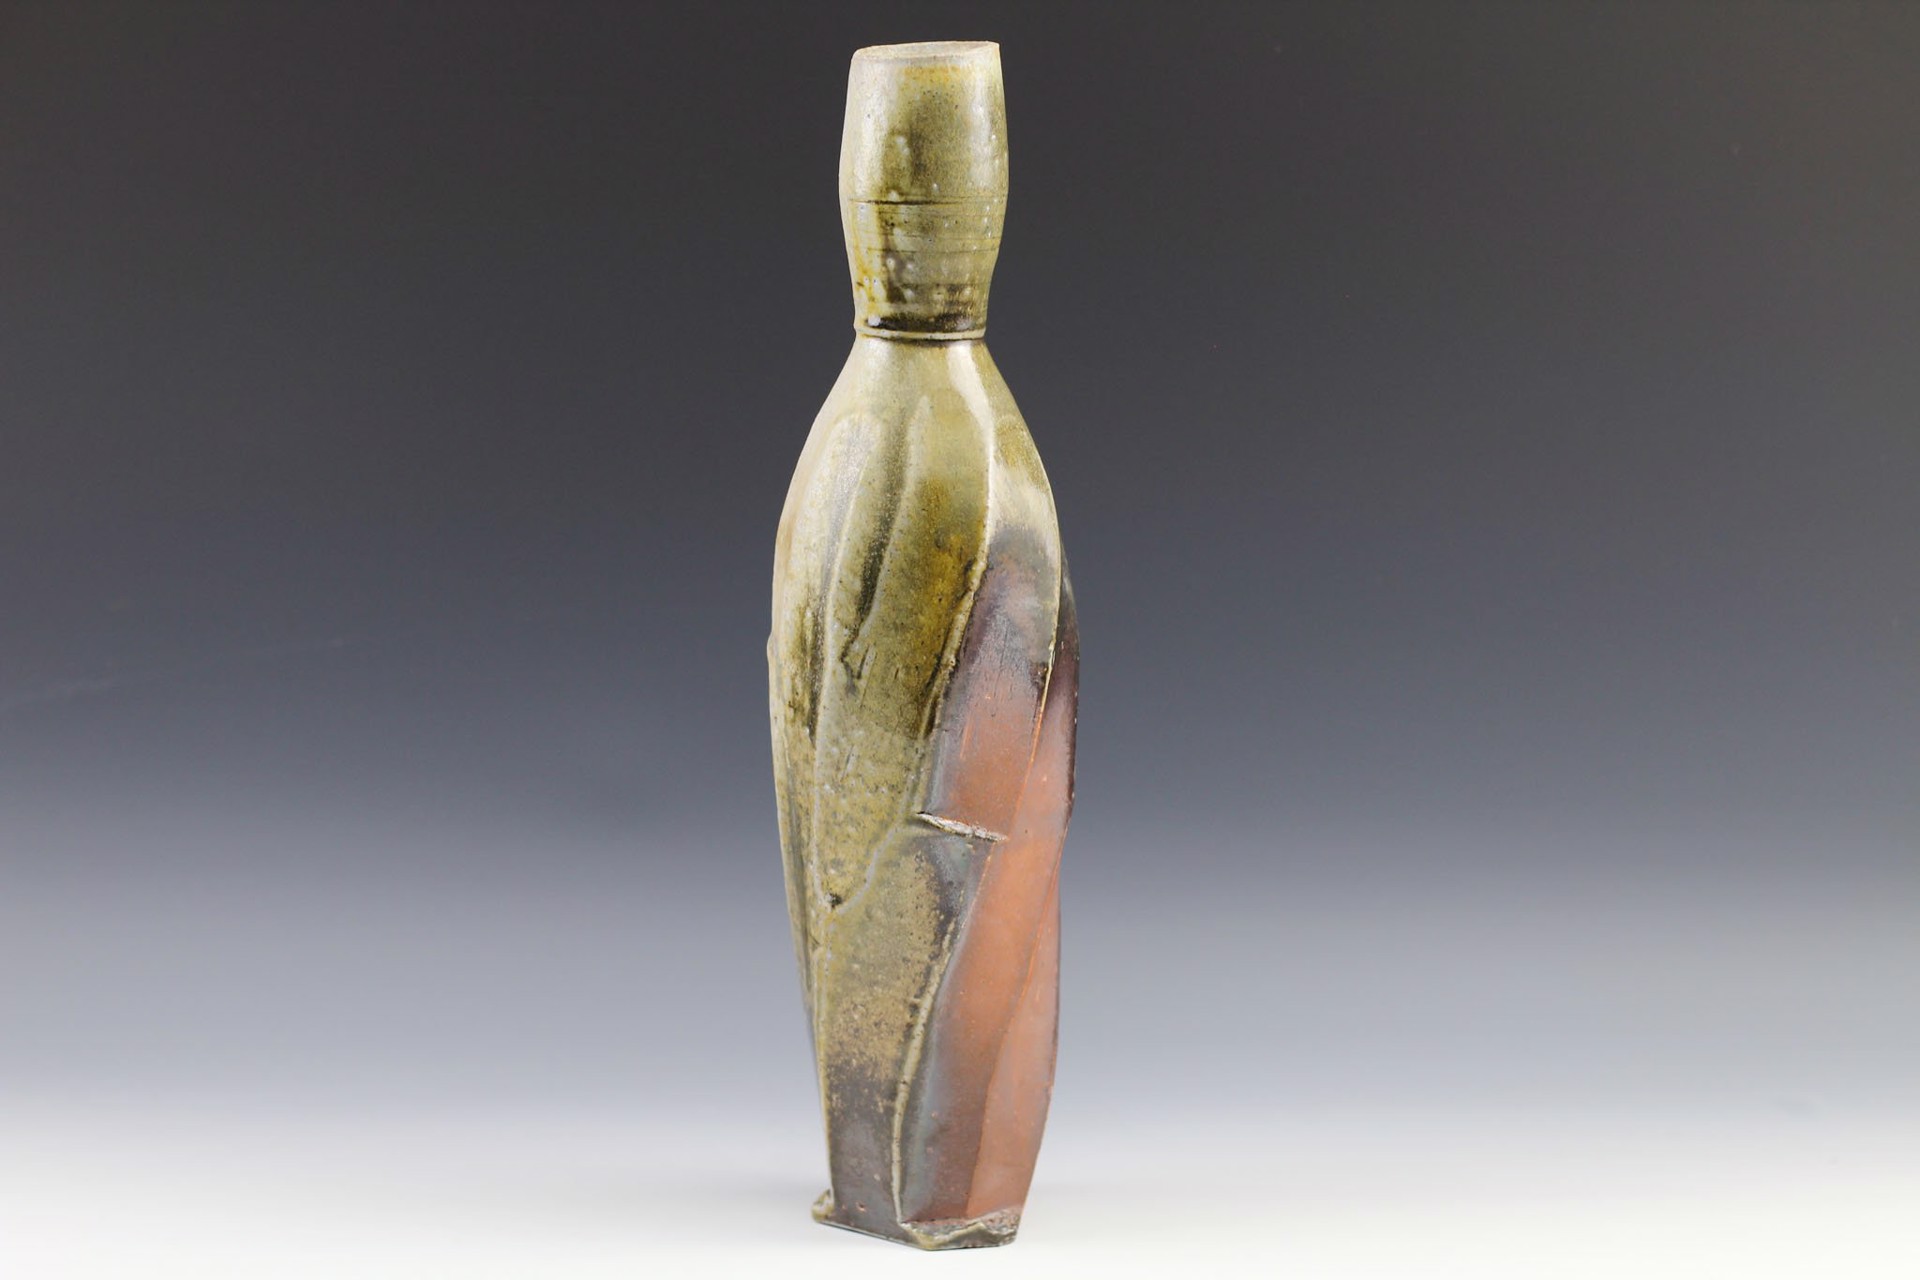 Bottle Vase by Zac Spates